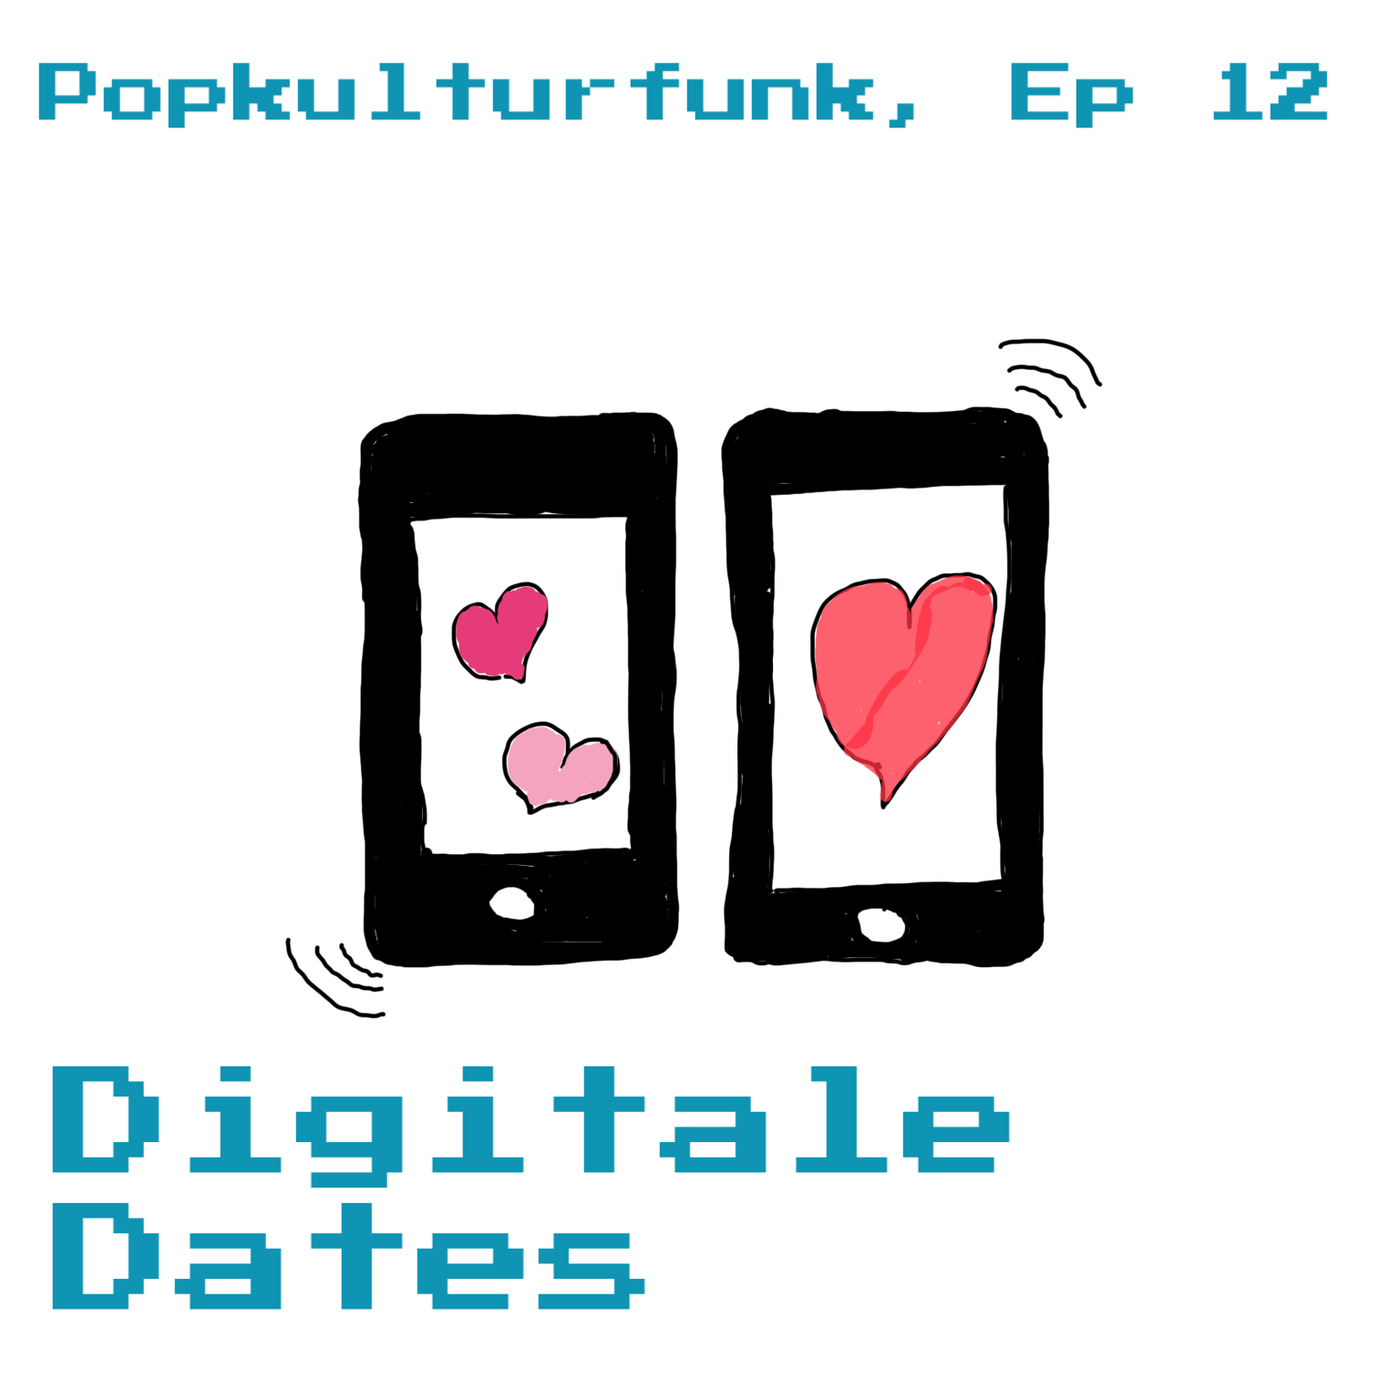 Episode 12: Digitale Dates